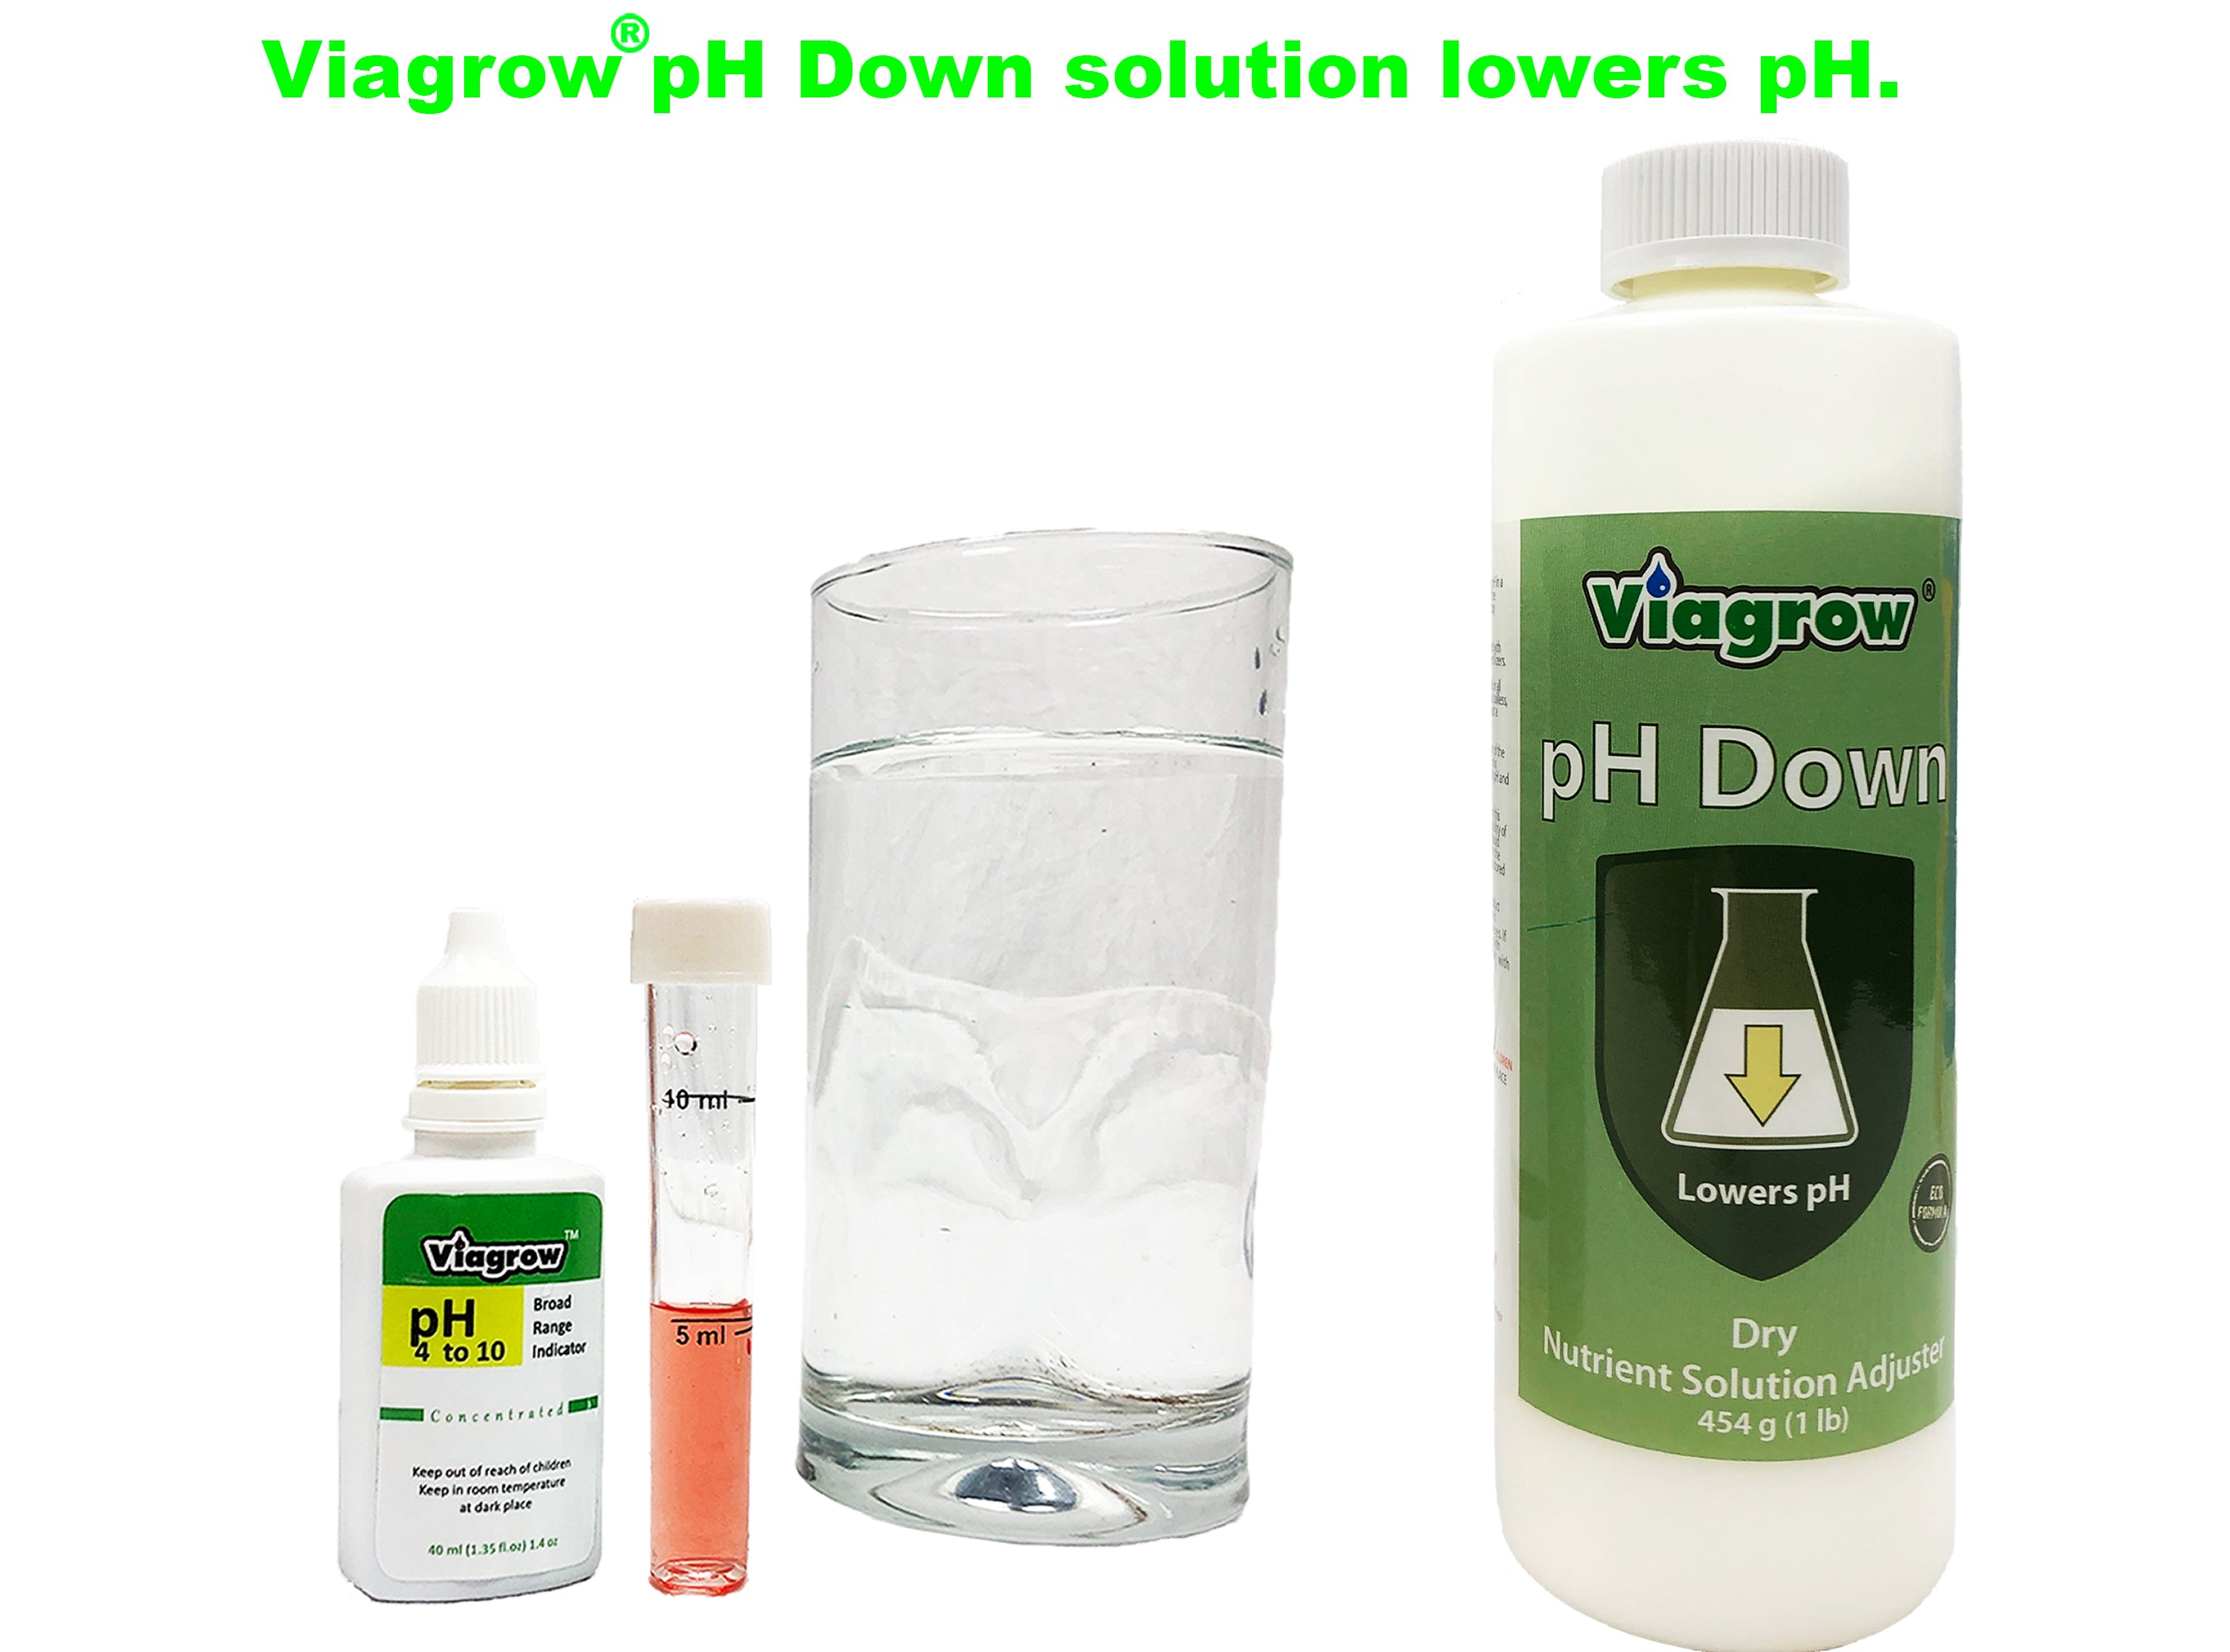 Viagrow Natural pH Down Adjusting Crystals, LB, Green, (Case of 48)